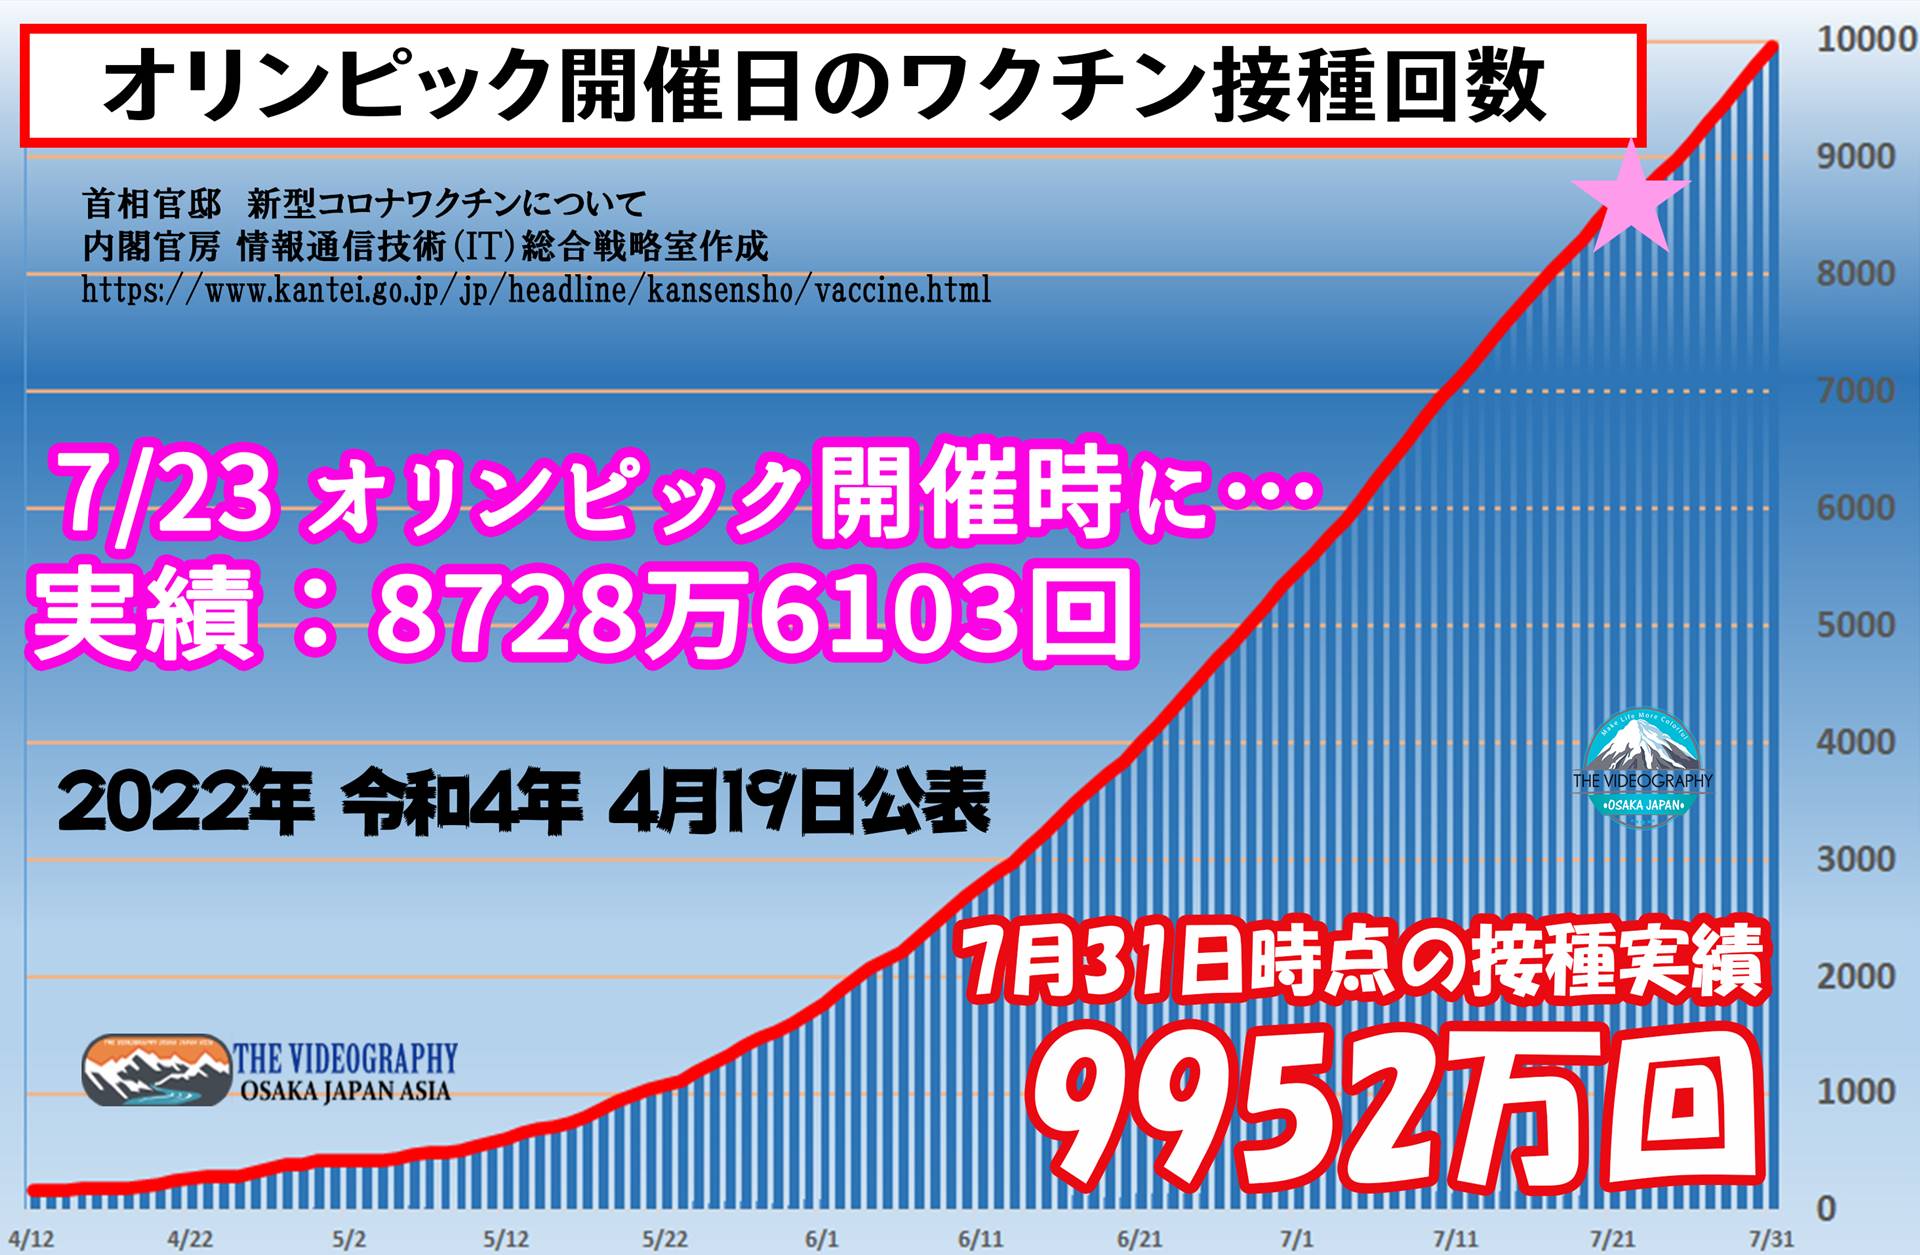 Japan Vaccines rolls out like a rising sun. 永遠の平和のために… オリンピックまでに日本のワクチン接種対象者の過半数が1回可能。 【7月23日 オリンピック開催時の新型コロナウイルス ワクチン接種状況】 7/23 オリンピック開催時のワクチン接種回数は… 5558万回（1日 80万回）：6218万回（1日 100万回）。※日本の接種対象人数（1億1375万人が接種対象と推計・12歳以上）のうち、約55％が1回接種（人口 1億2536万人・50％ 6268万人） 6月9日までの集計（6月10日 発表） 以降は予測/以下の通り、設定6月10日～6月21日までは1日 80万件の接種。 6月21日以降は 1日80万回 or 1日100万回。 7月31日時点のワクチン接種状況：6198万回（1日 80万回）　7018万回（1日 100万回） ※人口の約半分に1回接種完了（人口 1億2536万人・50％ 6268万人） 【結論】 オリンピックまでに約6000万回接種を目指す 医療従事者（順調に接種進行・統計上、あと5日ほどで全従事者の2回接種が完了・460万×2＝920万） 全高齢者 3600万人 全五輪関係者 500万人（通常開催での人数を設定） 公務員など 500万人（正確な人数は不明・下記参照） ※五輪/オリンピック参加者（選手やボランティアや海外からの観客も含め・あくまで仮定・過去の資料/コロナ以前の人数を想定） 【5520万回・全高齢者 + 医療従事者 + オリンピック関係者 + 公務員 すべて1回接種】